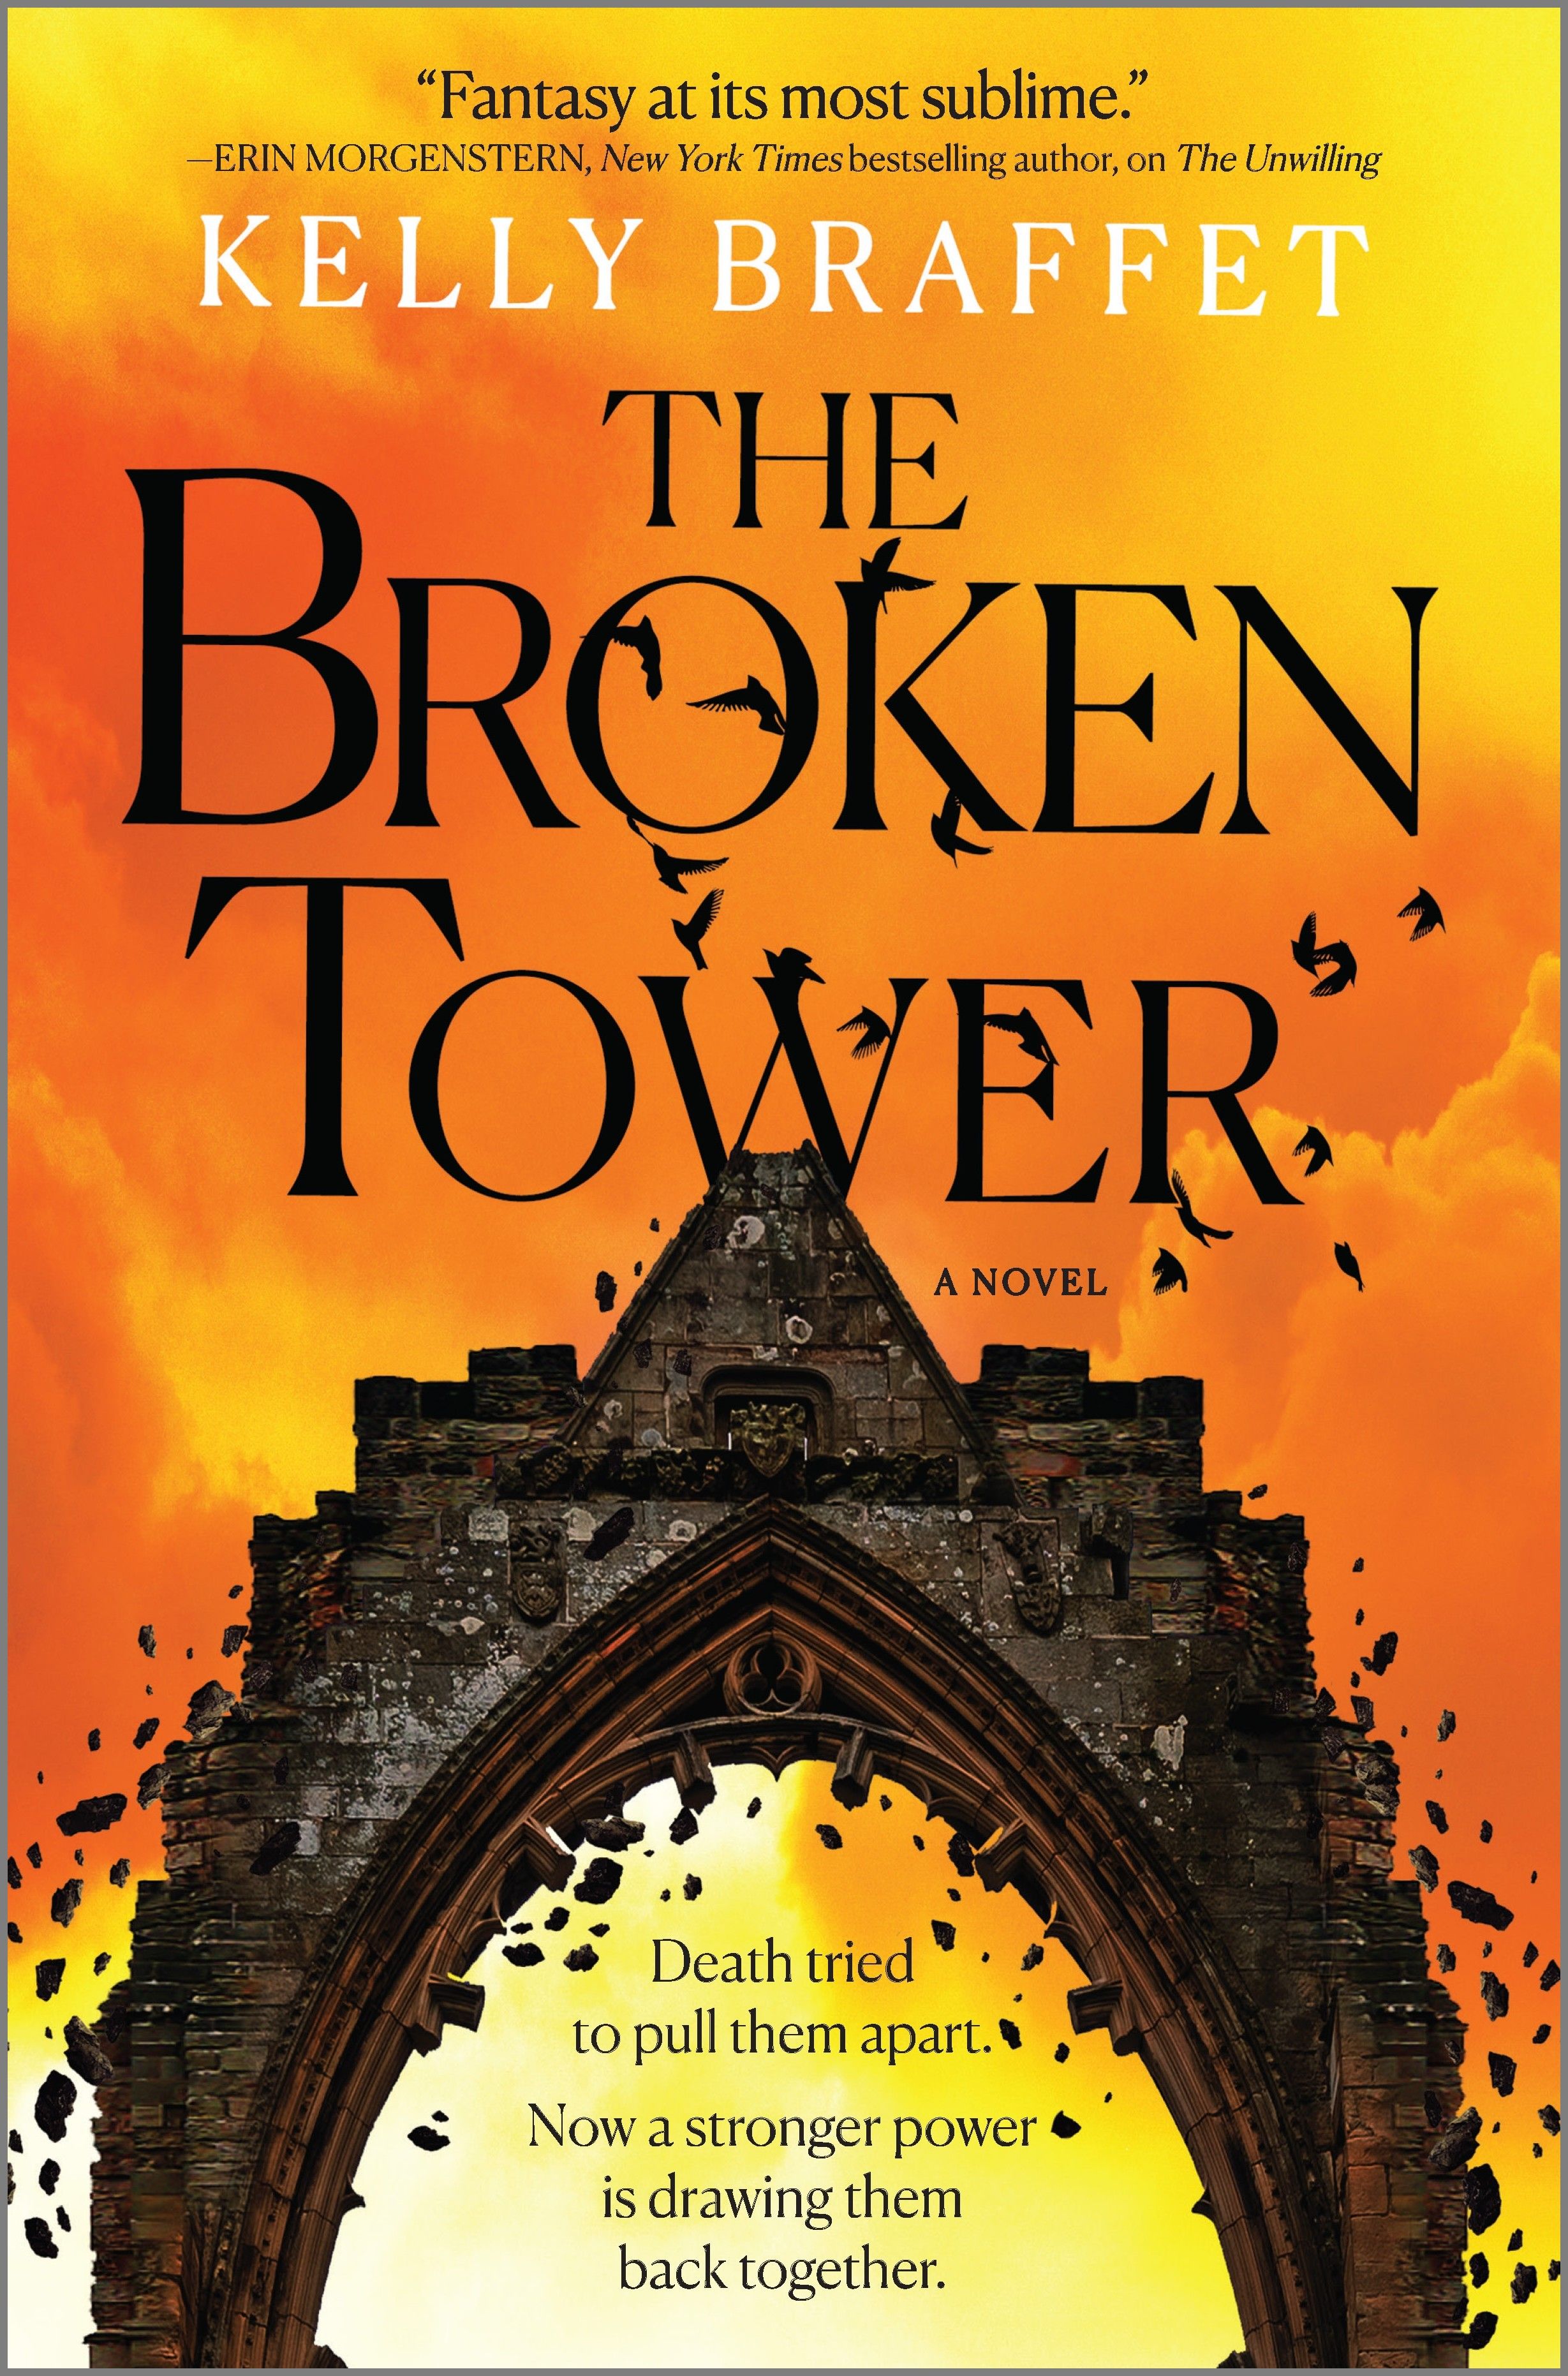 The Broken Tower by Kelly Braffet